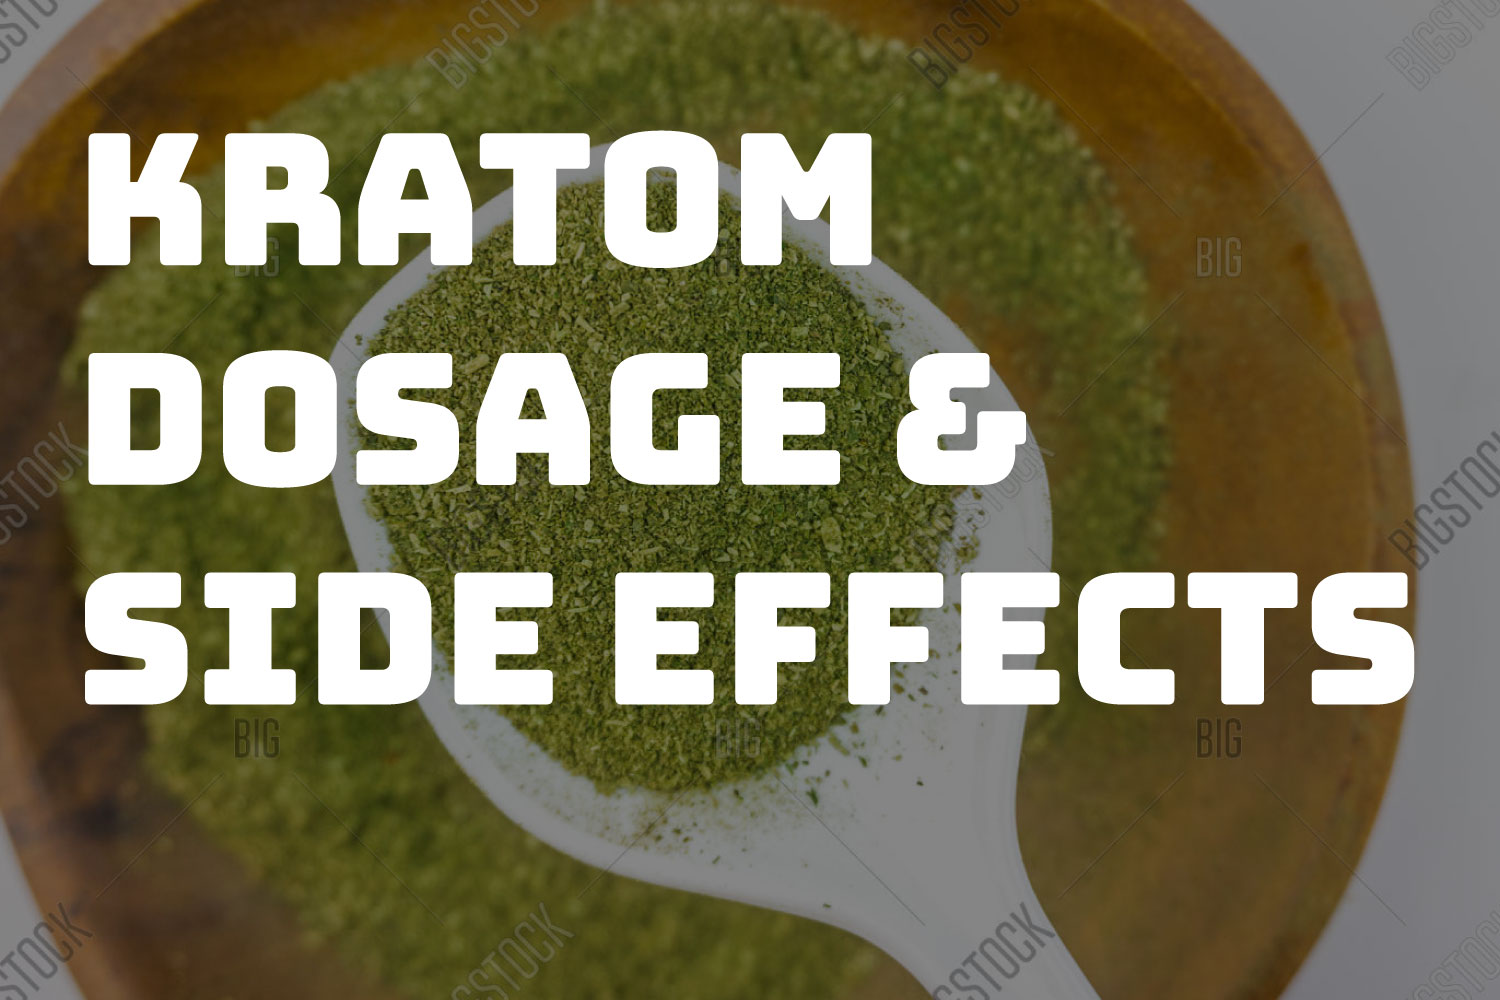 kratom-dosage-tolerance-ph